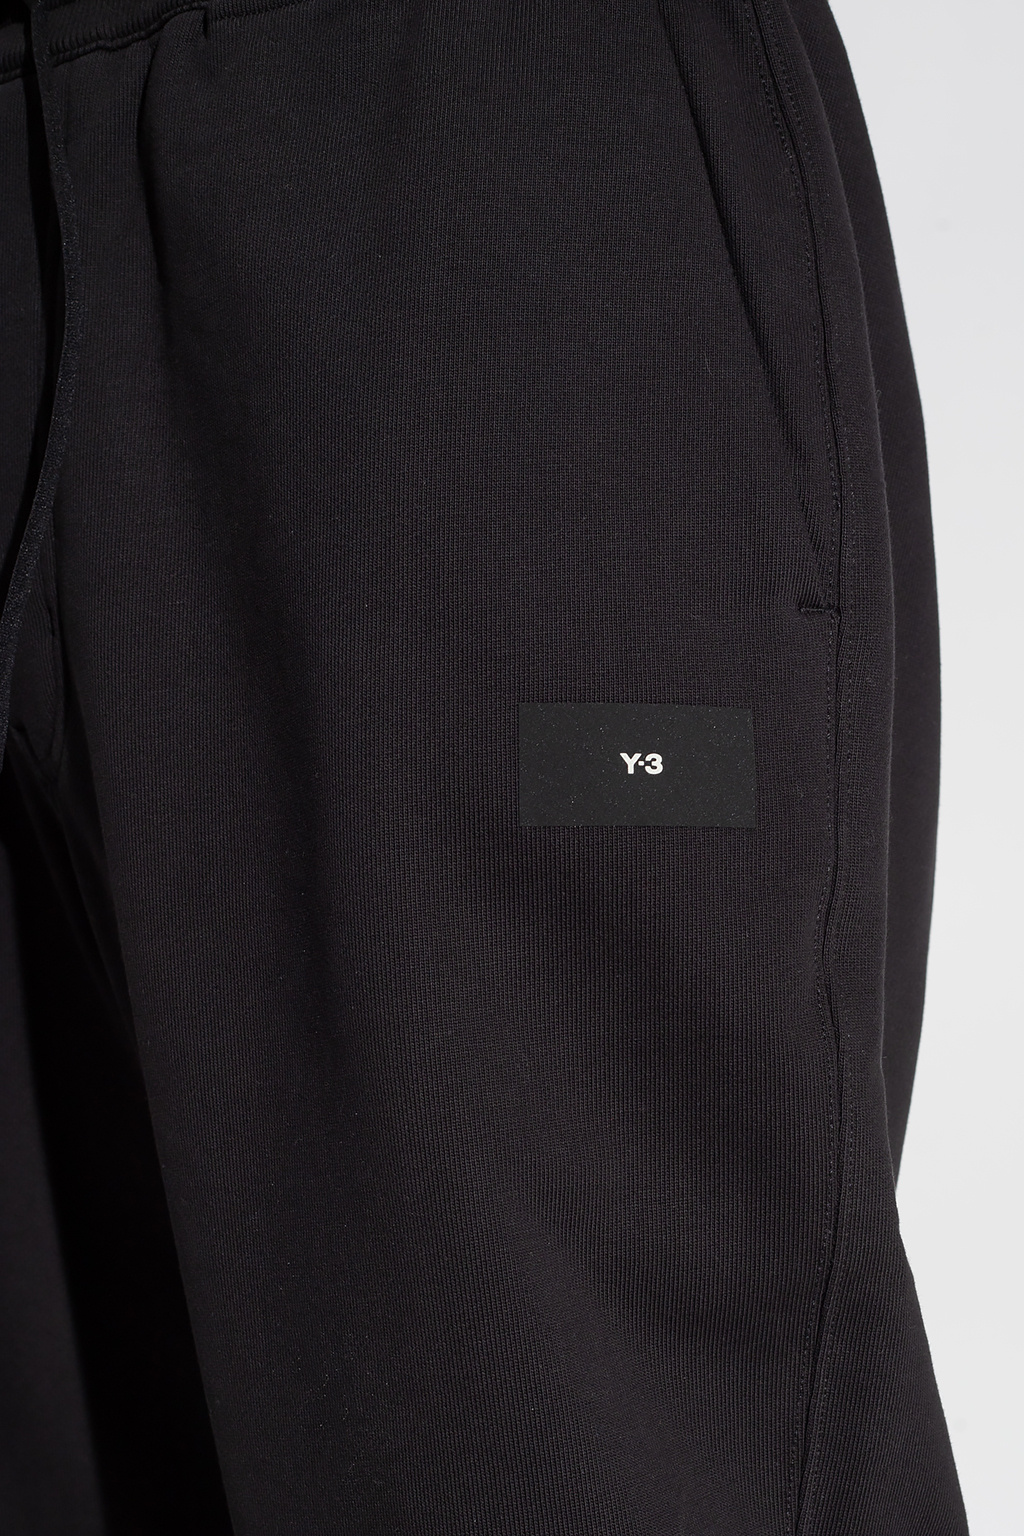 Y-3 Yohji Yamamoto lautre chose velvet long sleeve shift dress item